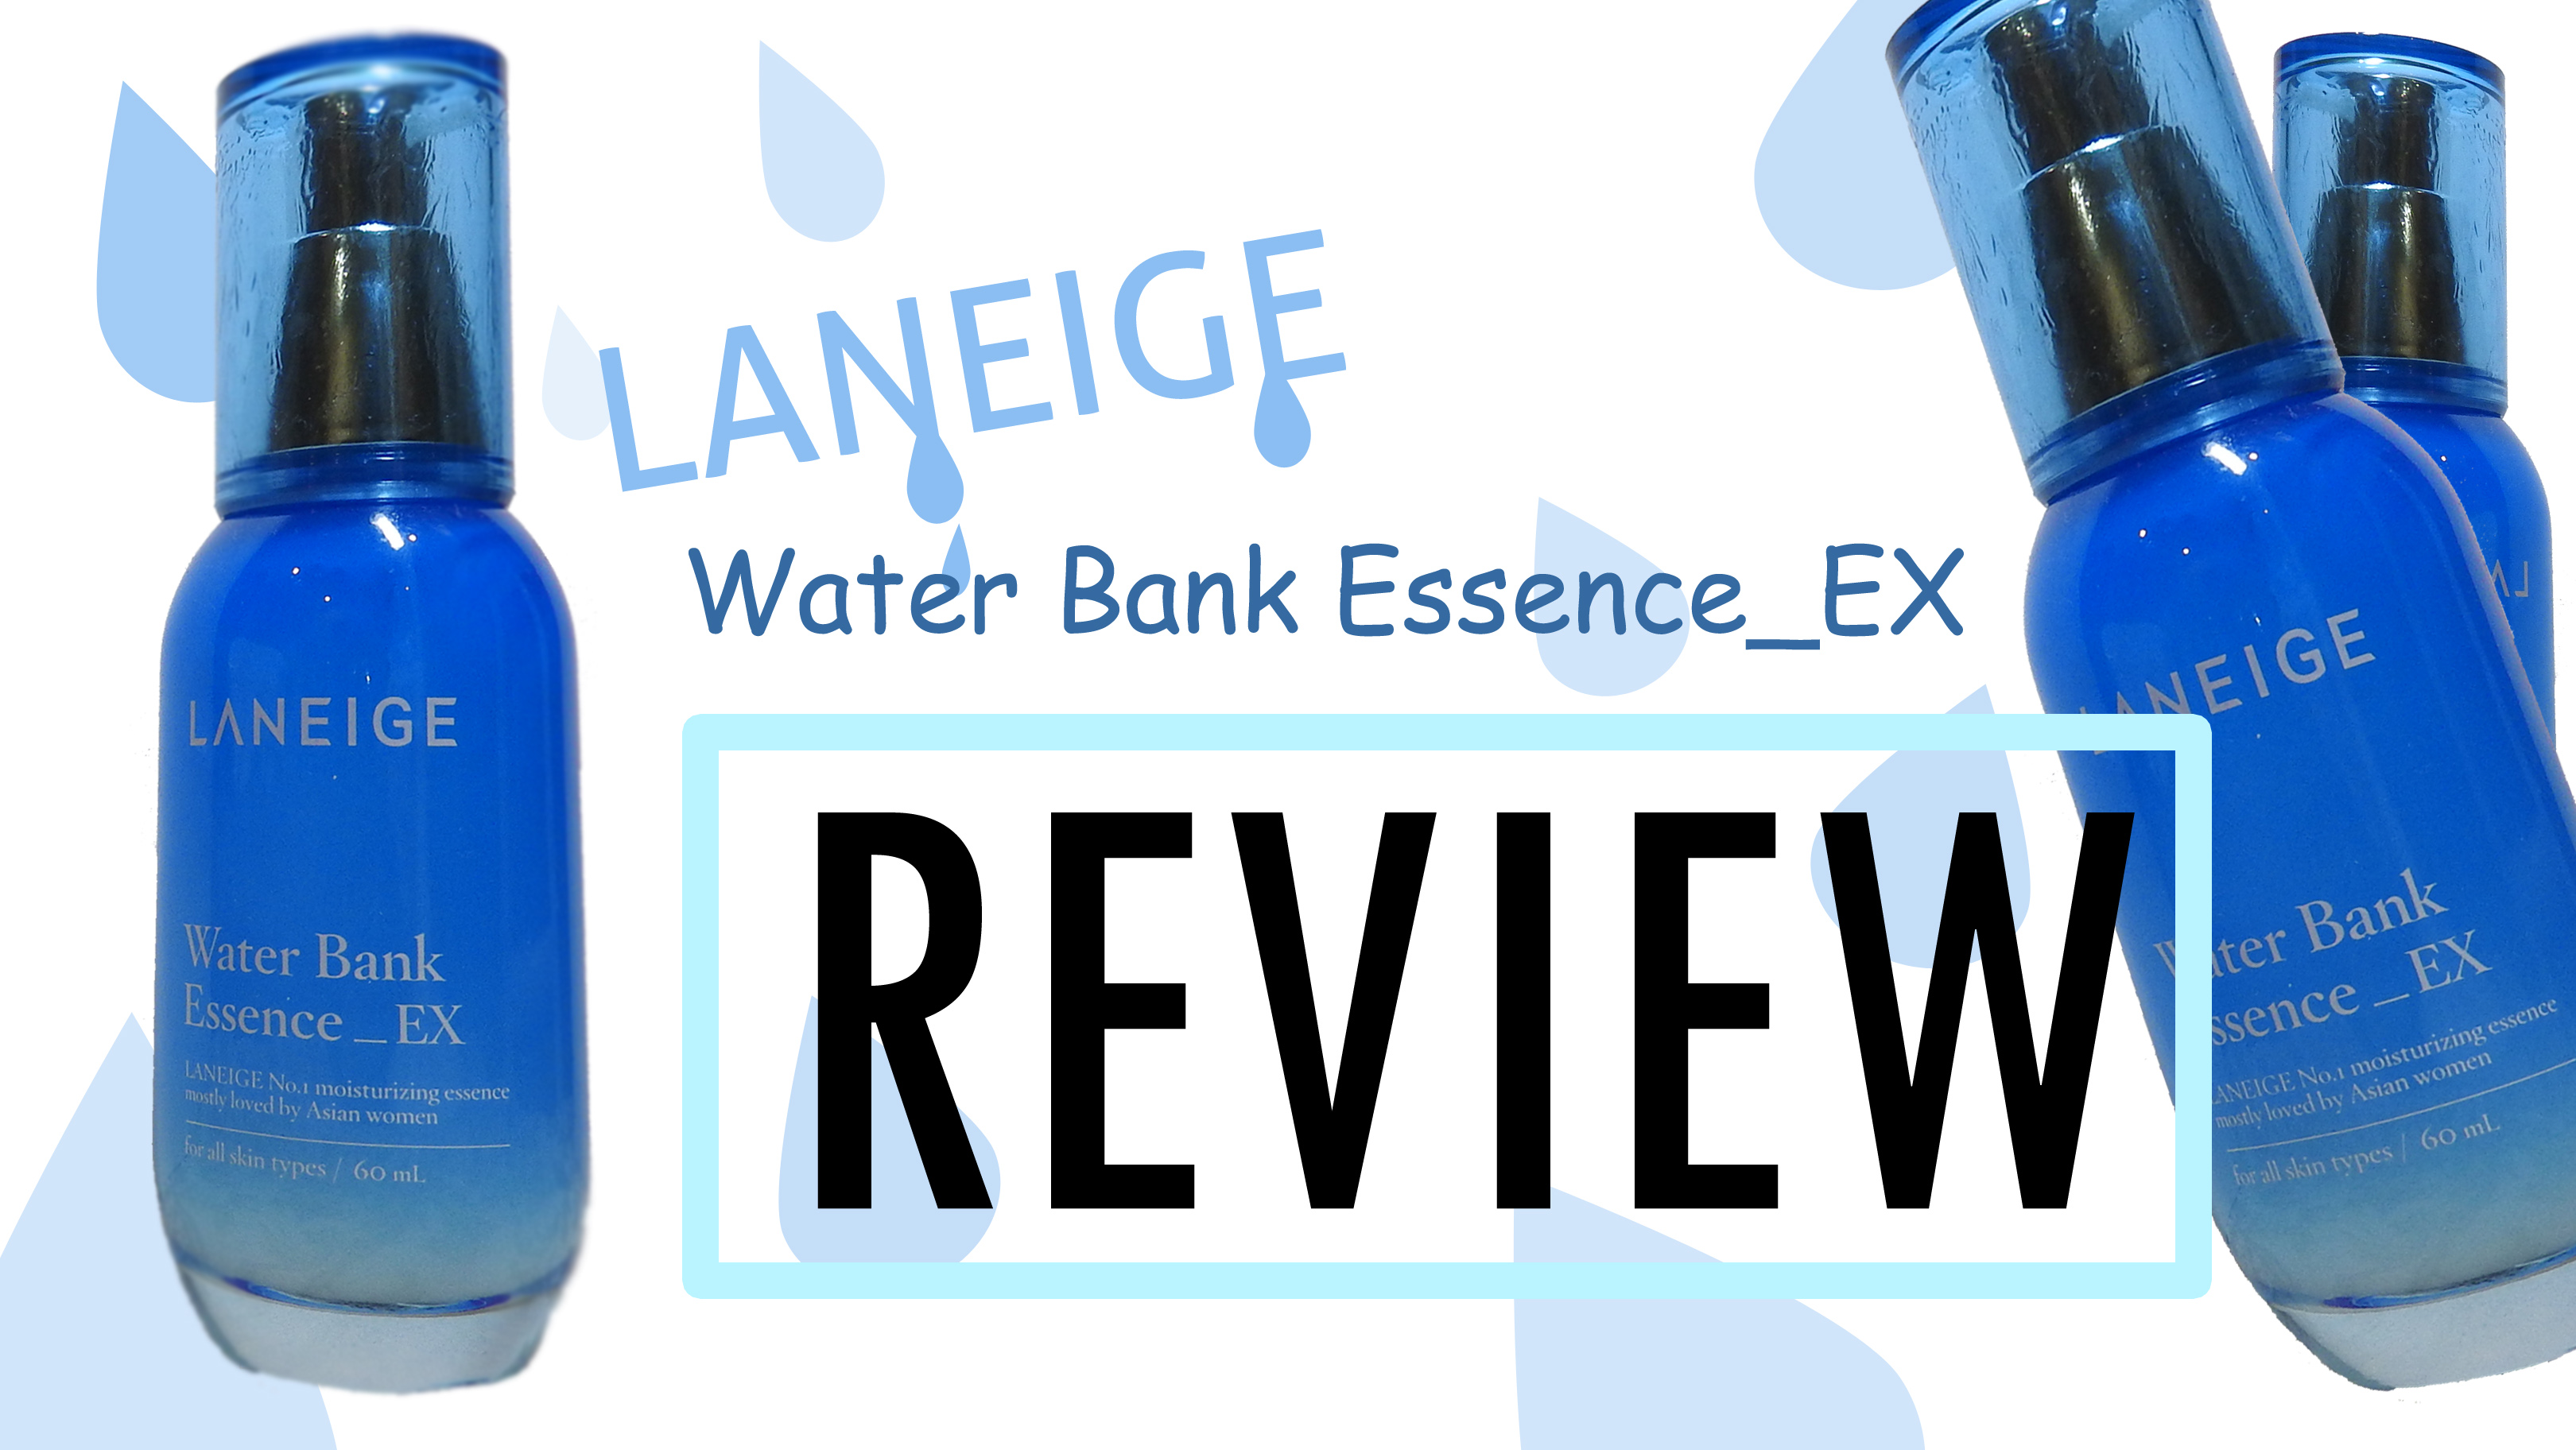 Laneige Water Bank Moisture Essence 10 мл. Мизон Water Volume ex first Essence. Ln Essence. Serum Bank.